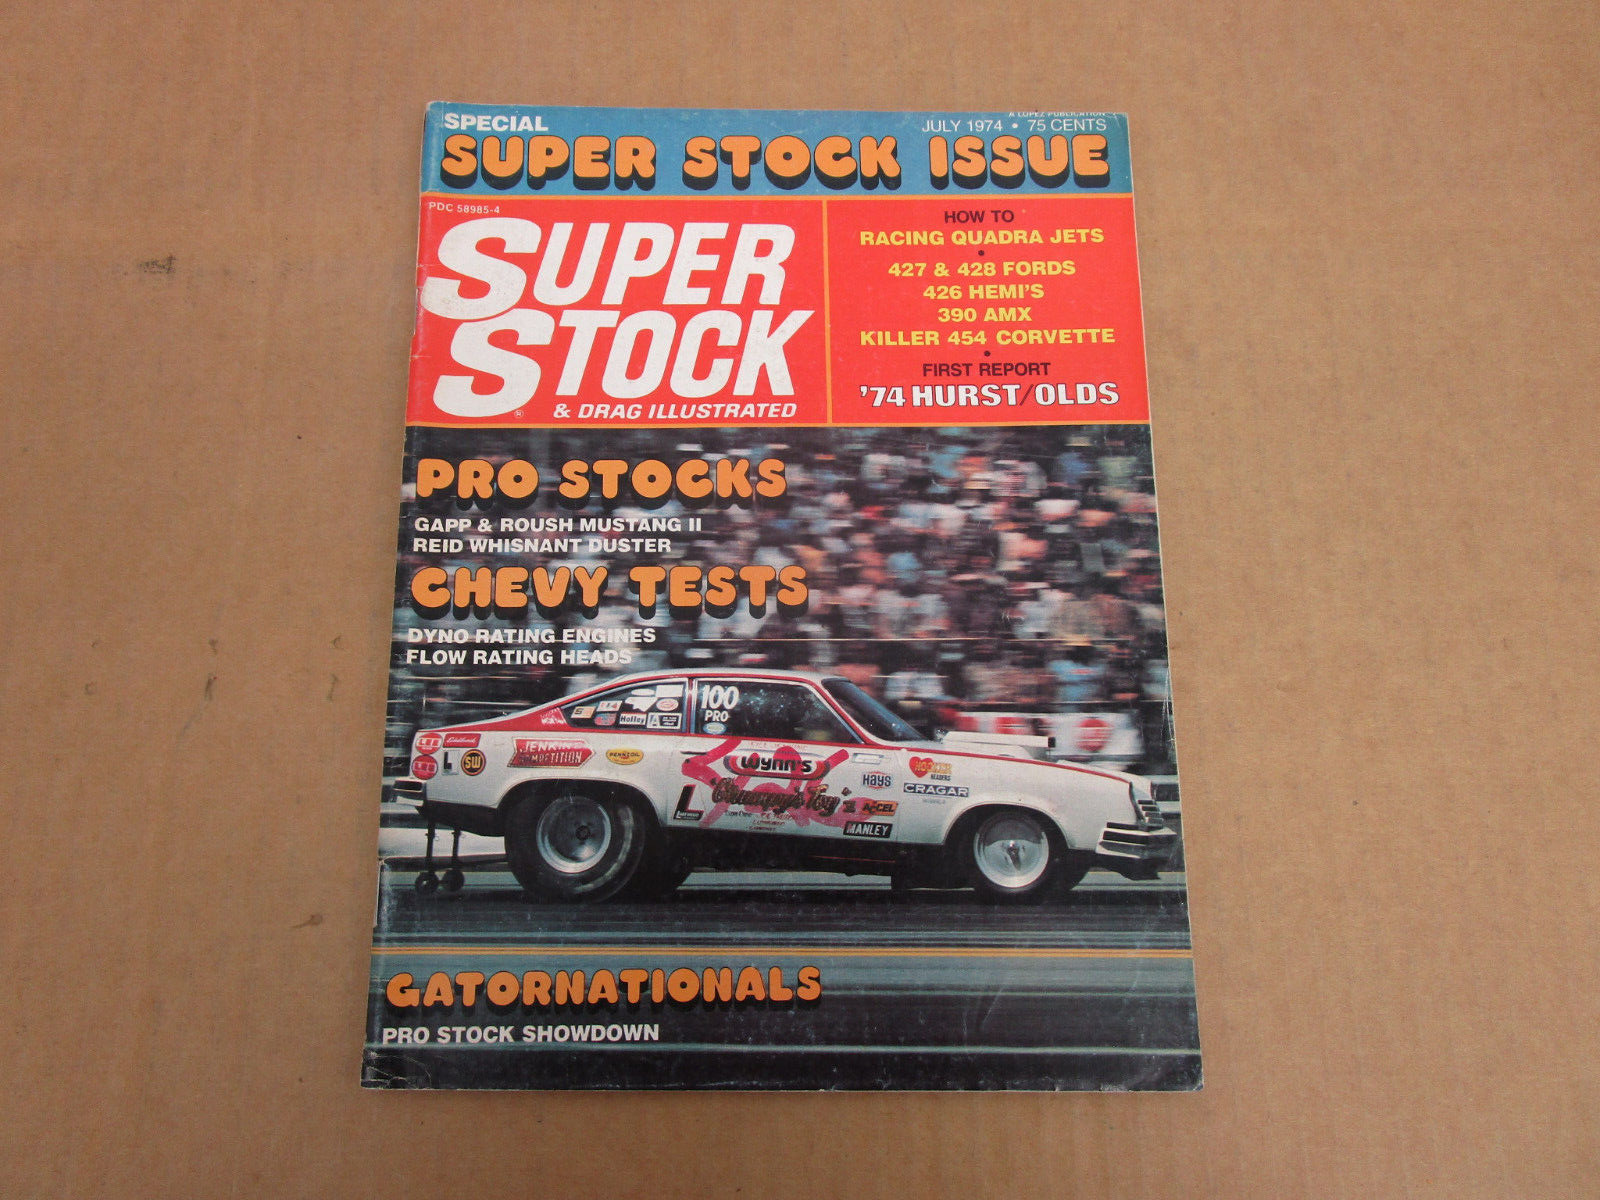 SUPER STOCK & DRAG ILL magazine July 1974 Corvette Mustang Duster race racing